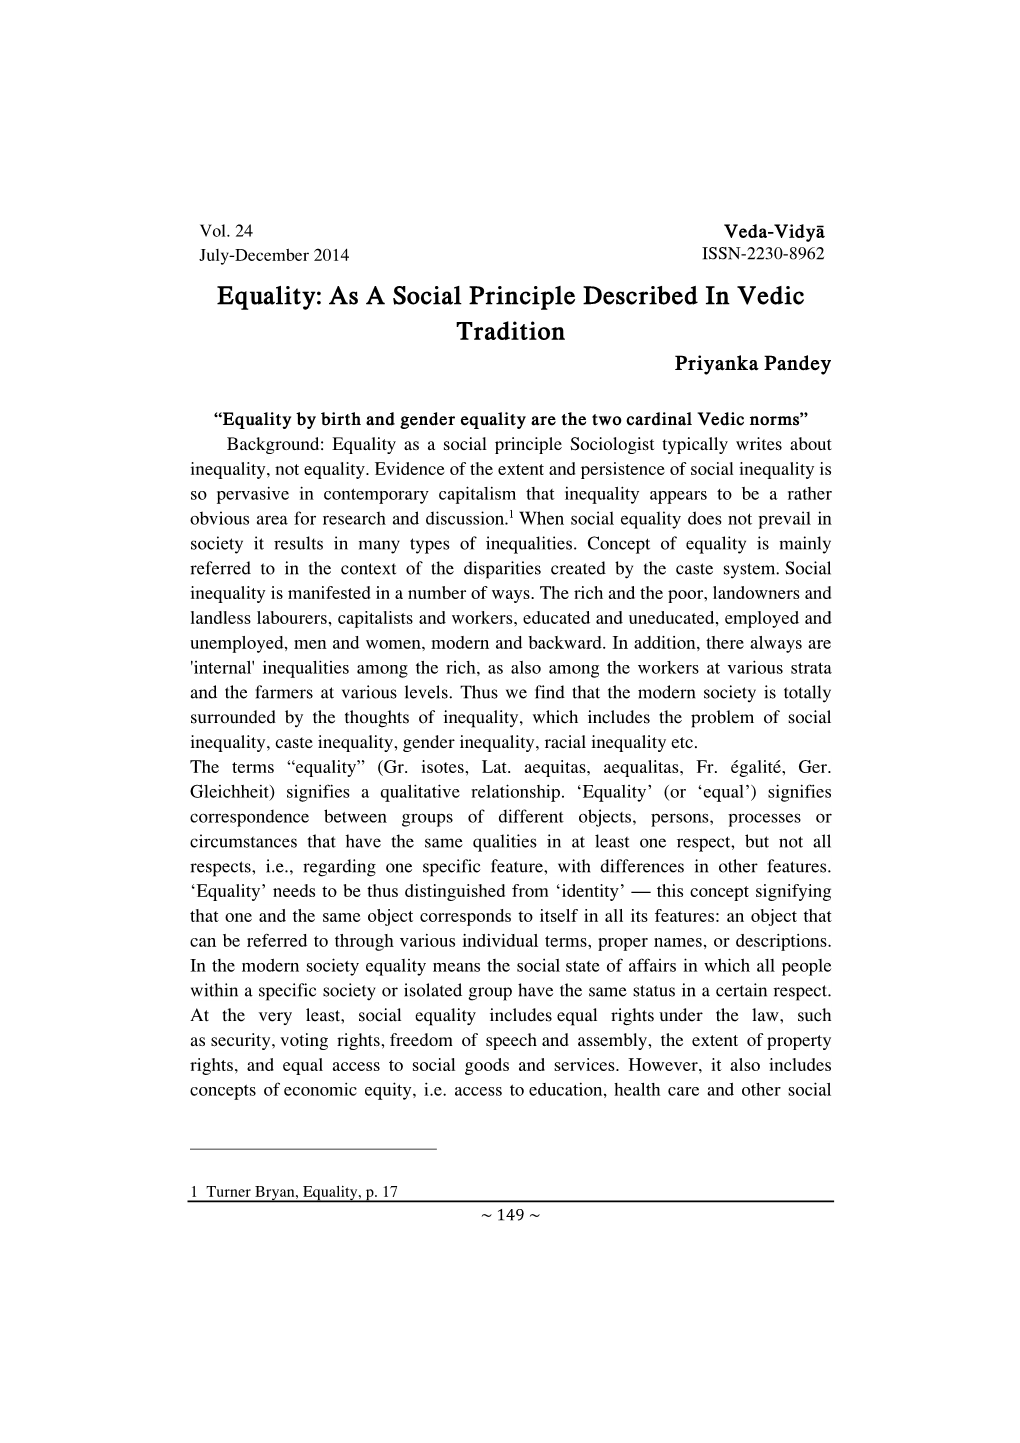 Equality: As a Social Principle Described in Vedic Tradition Priyanka Pandey